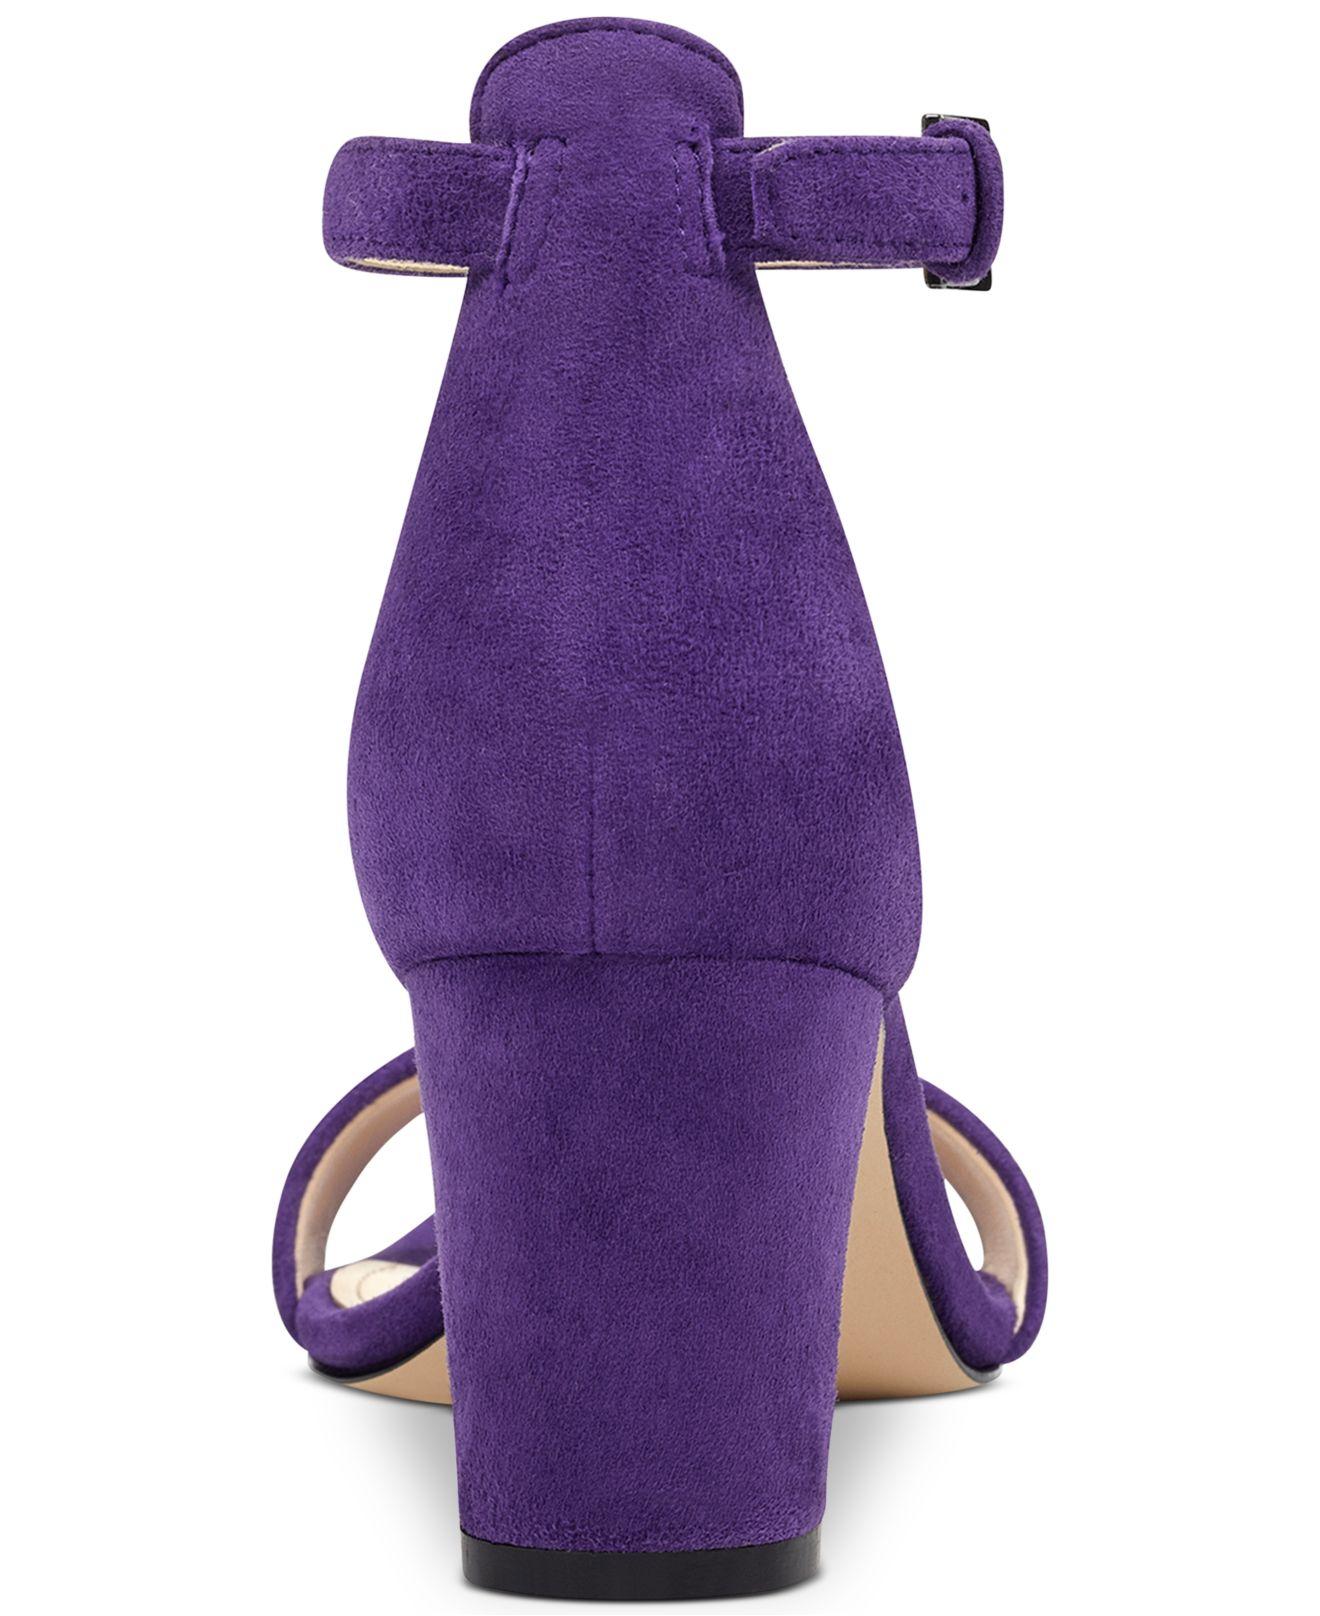 Nine West Suede Pruce Block Heel Sandal in Dark Purple (Purple) - Lyst